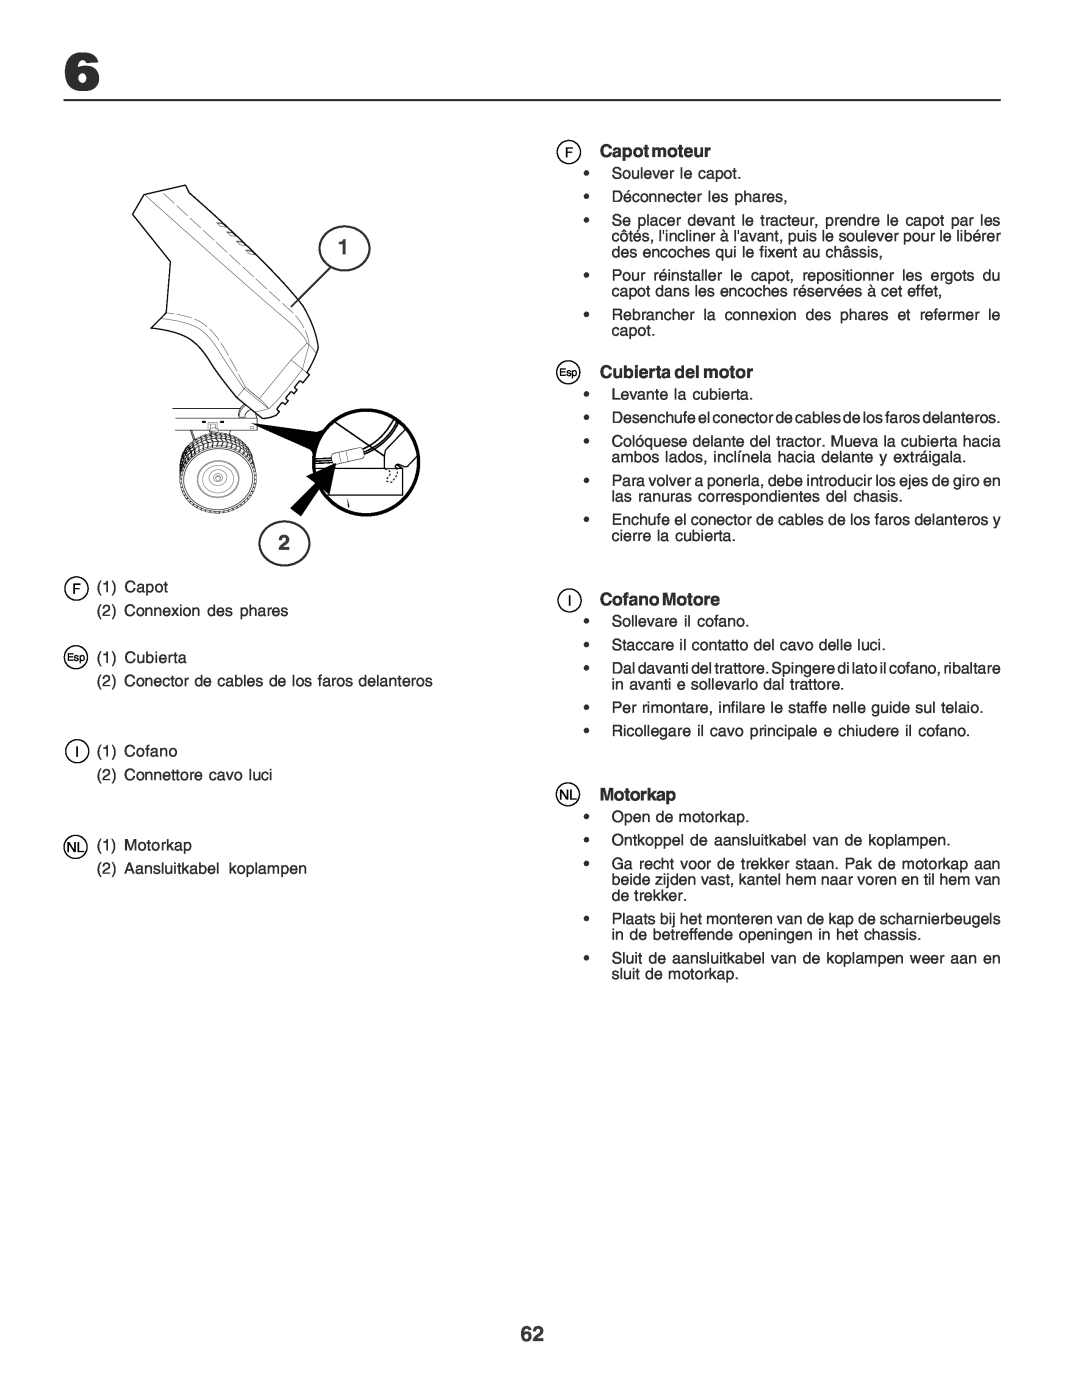 Husqvarna CTH170 instruction manual F Capot moteur, Esp Cubierta del motor, Cofano Motore, NL Motorkap 